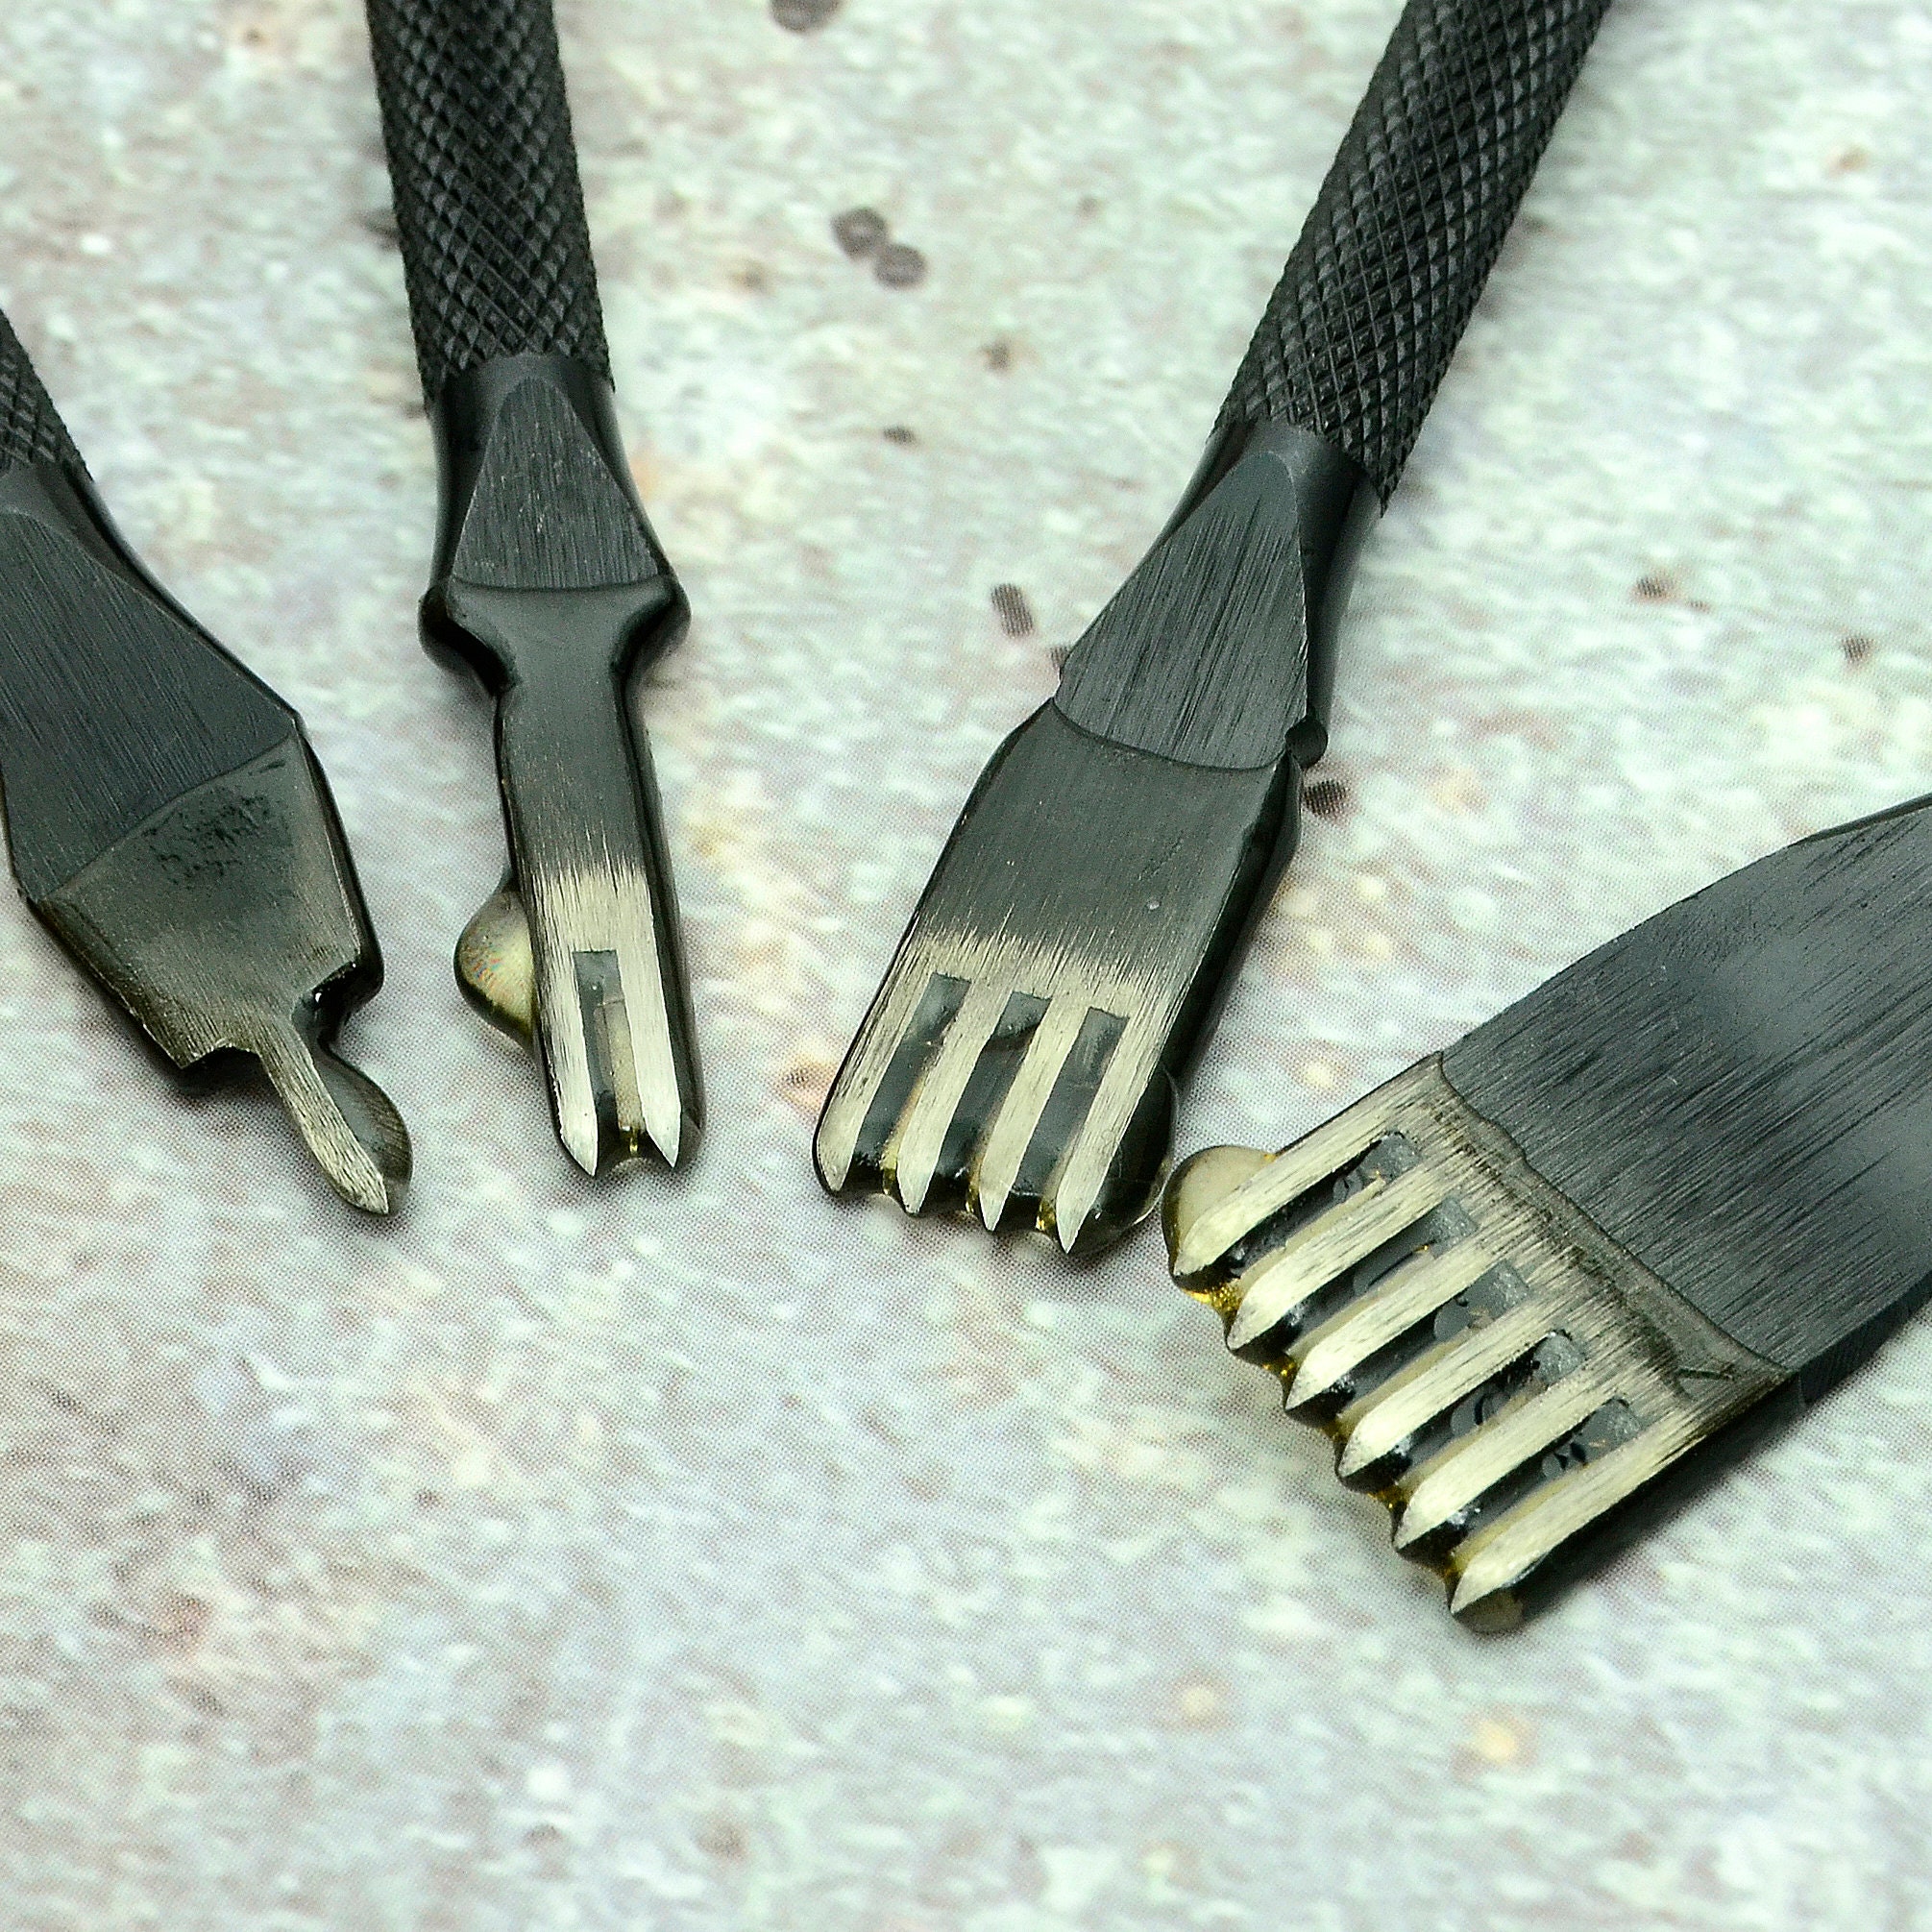 Ksbladepunch / Pricking Irons black for High Quality Leathercraft Tools /  Saddle Stitching, Stitching Chisel / Ksblade / KSB 